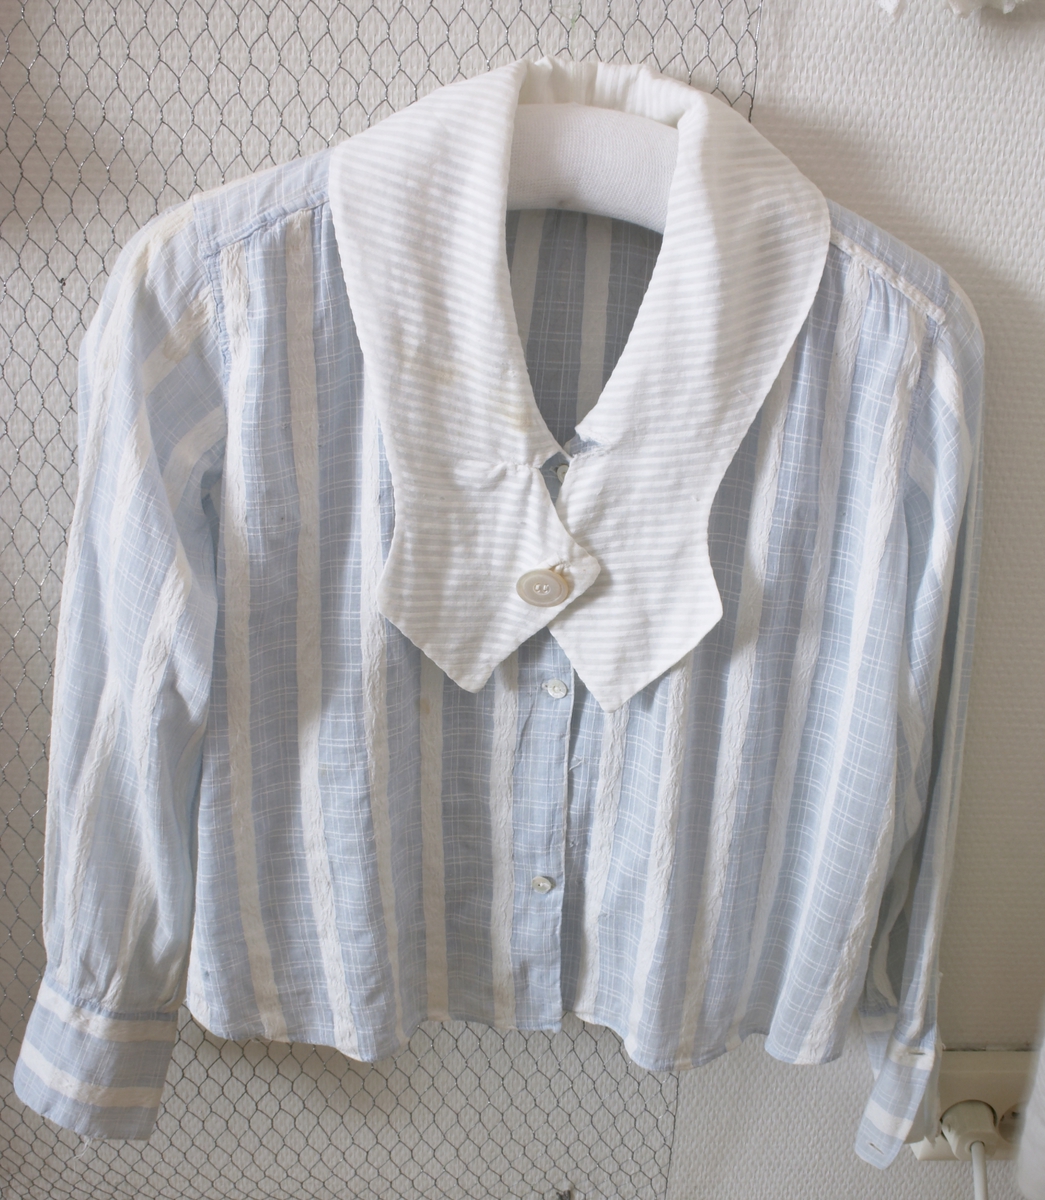 Blå og hvitstripet bluse med lange arme og stor hvit krage.